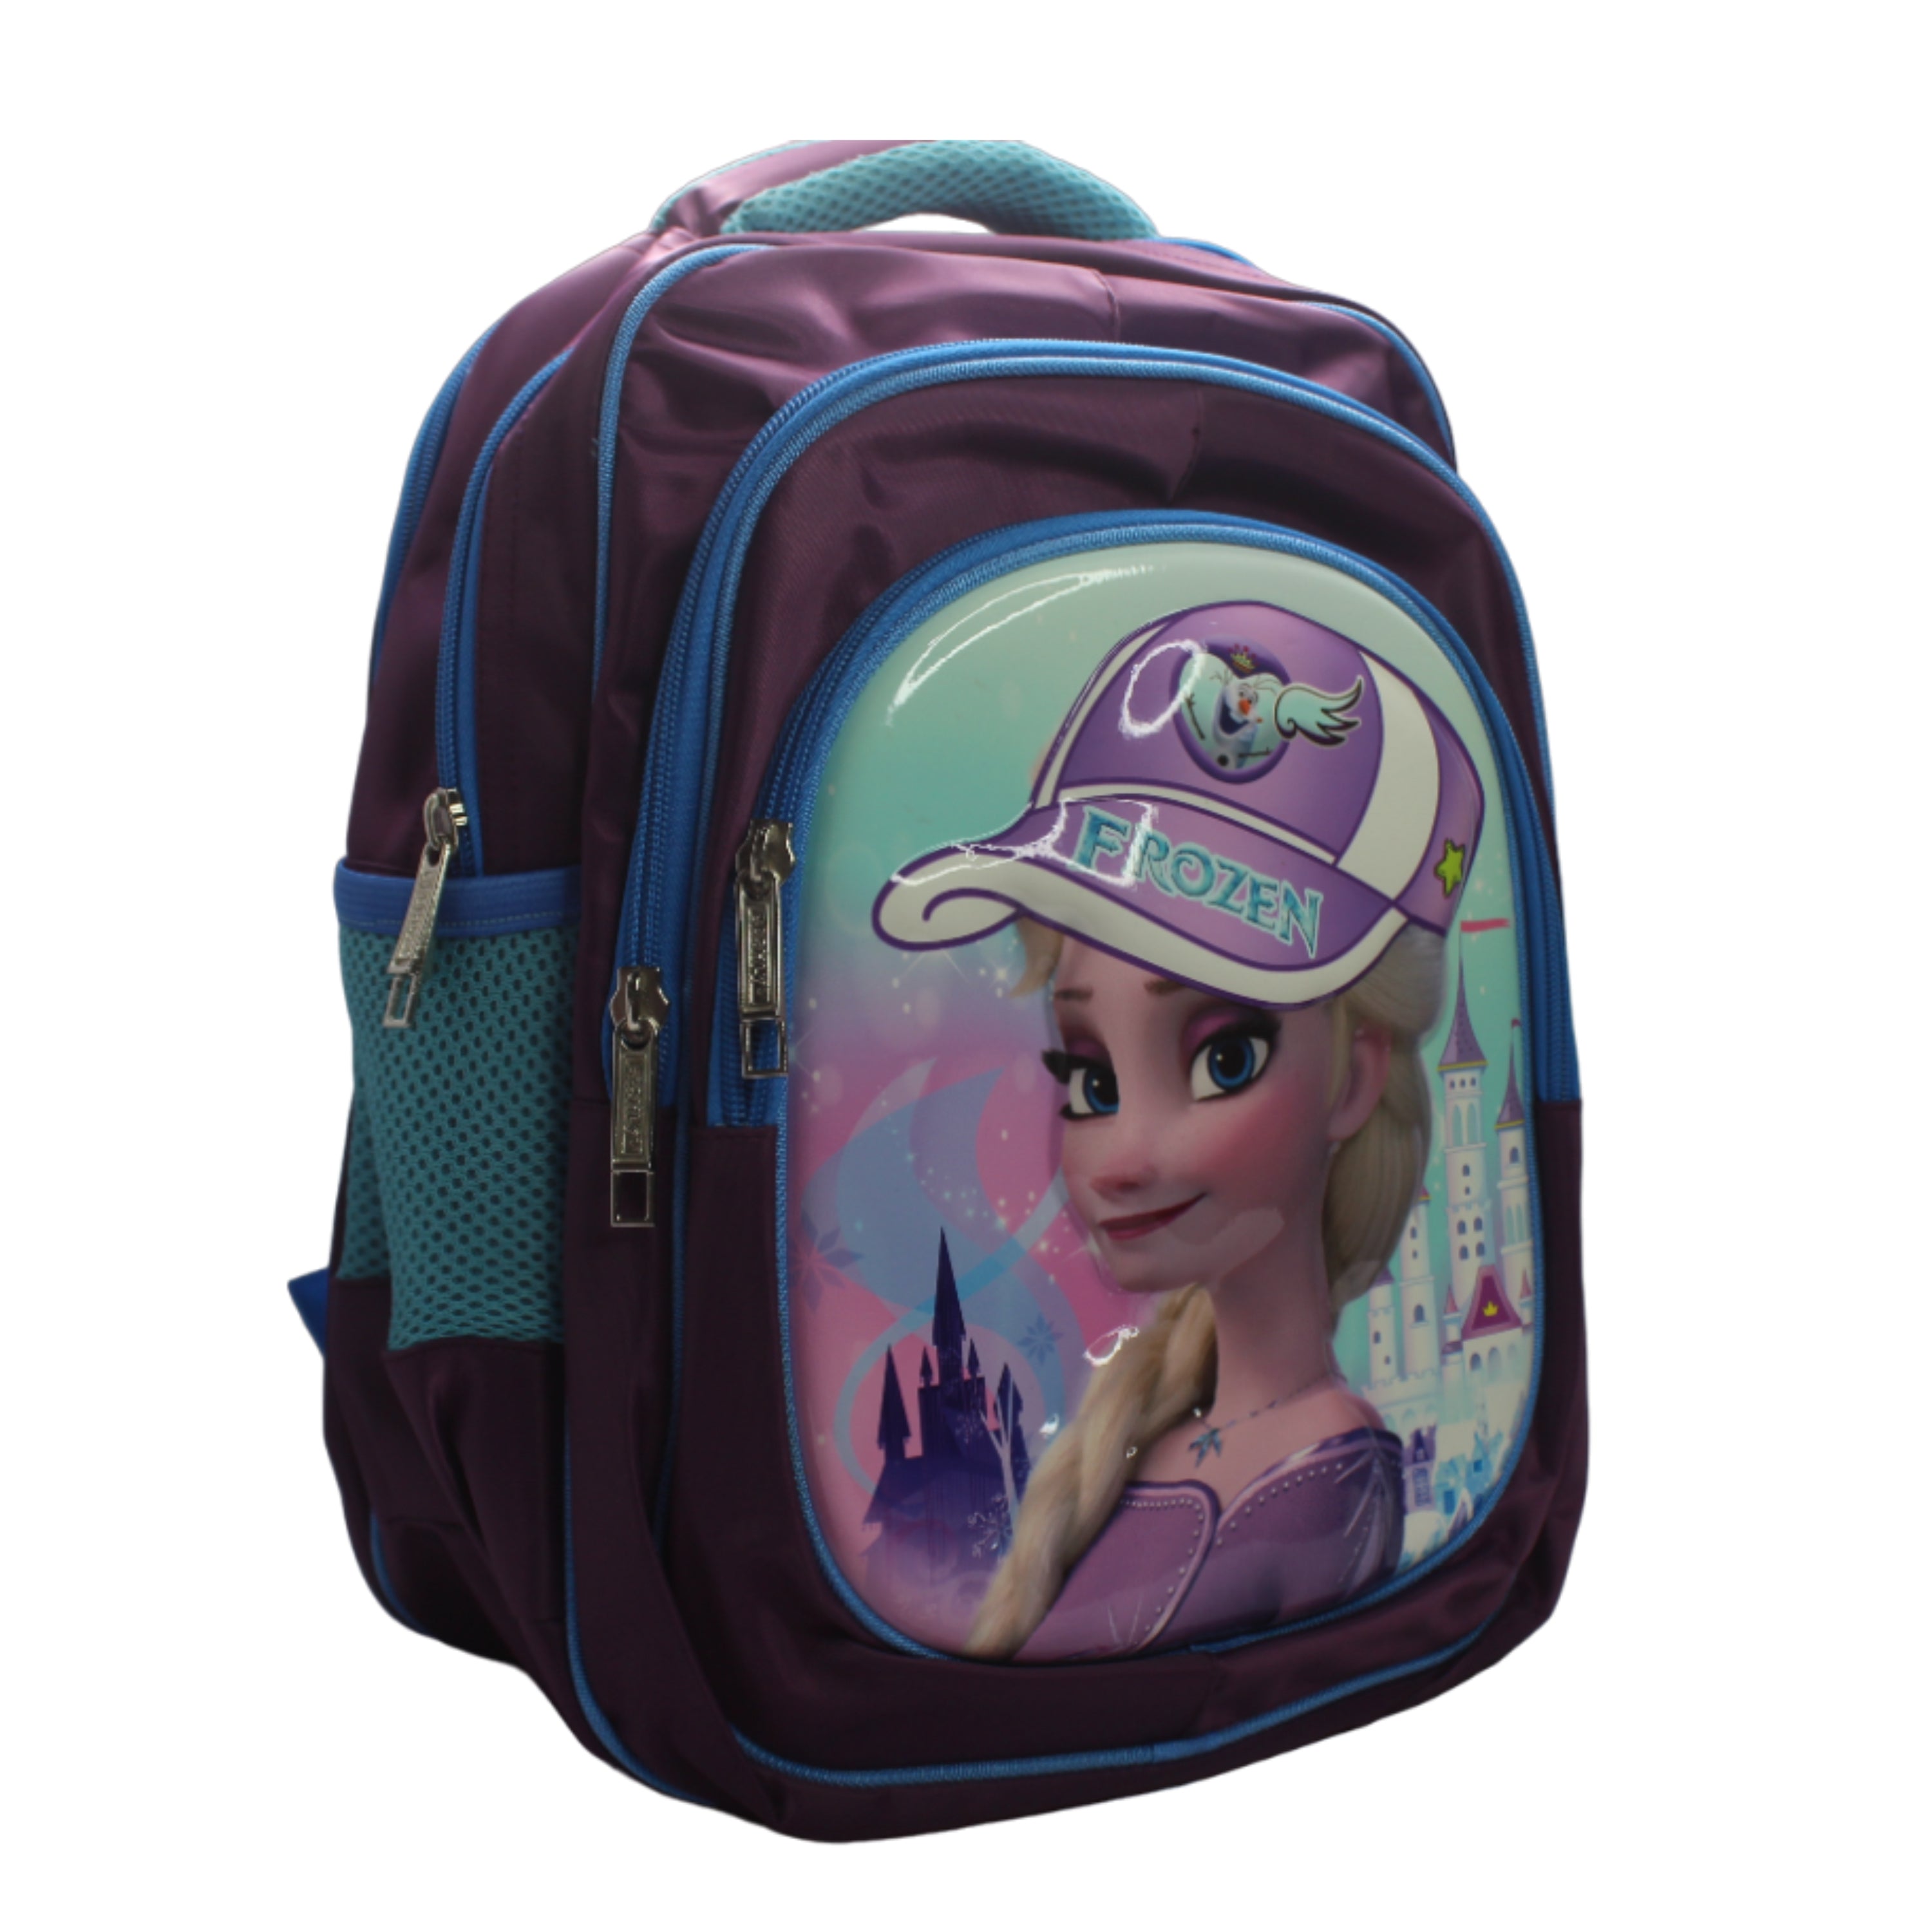 Frozen School bag for Kids Class 1